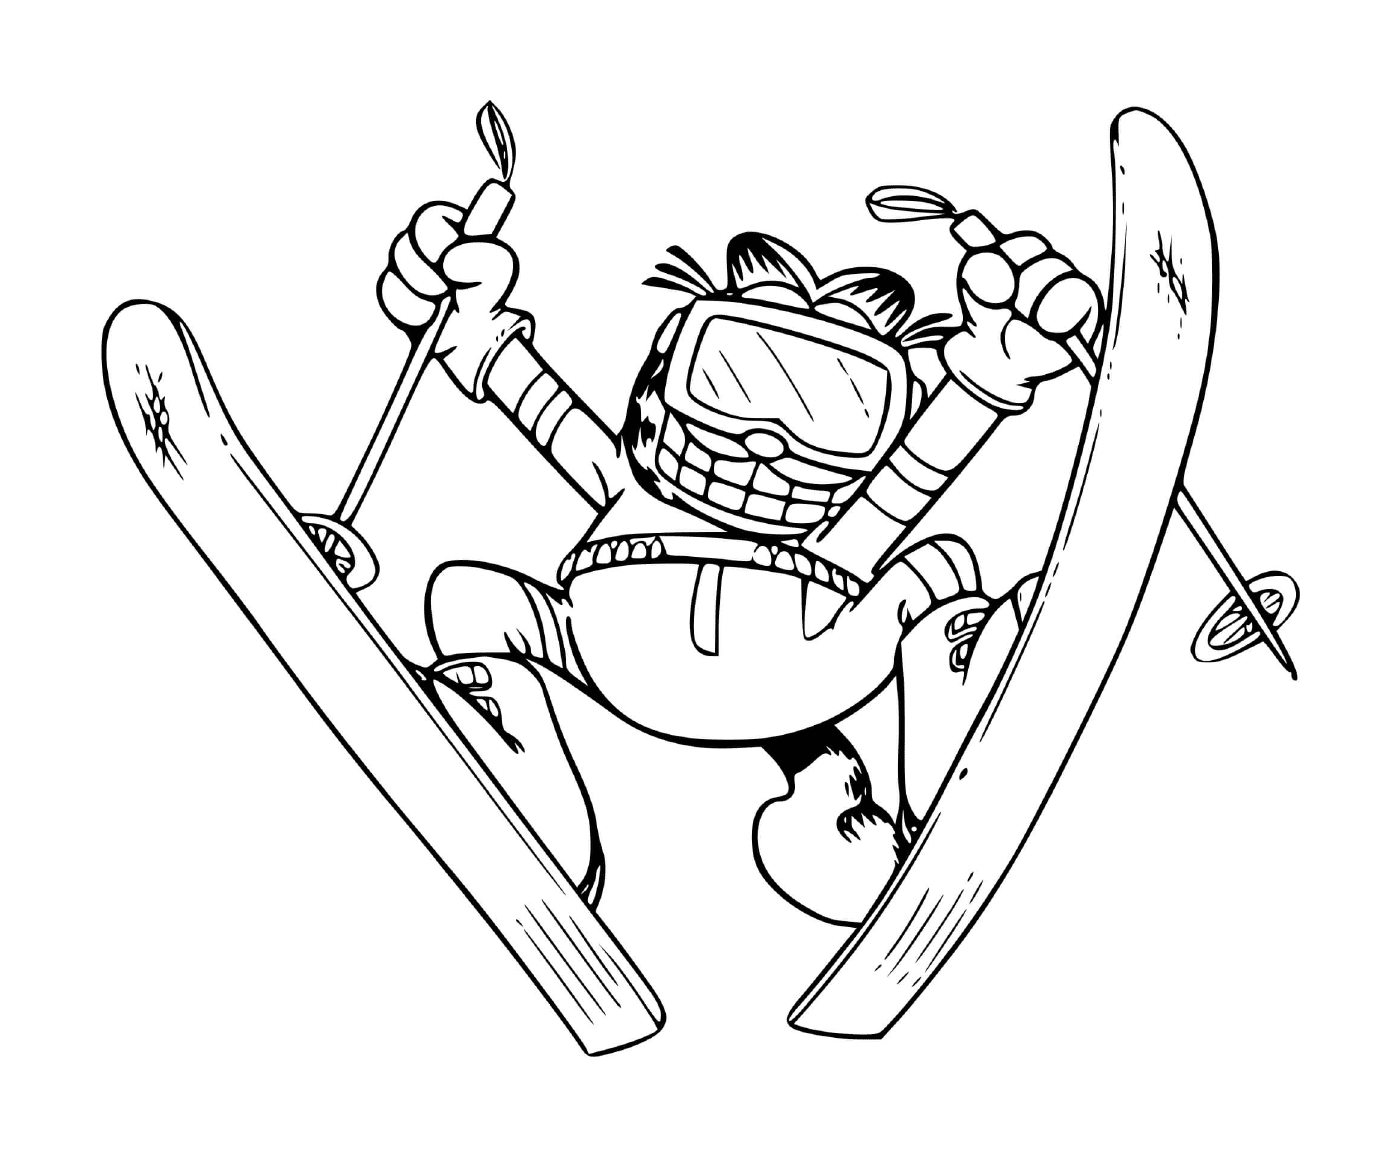 Garfield fait du saut a ski